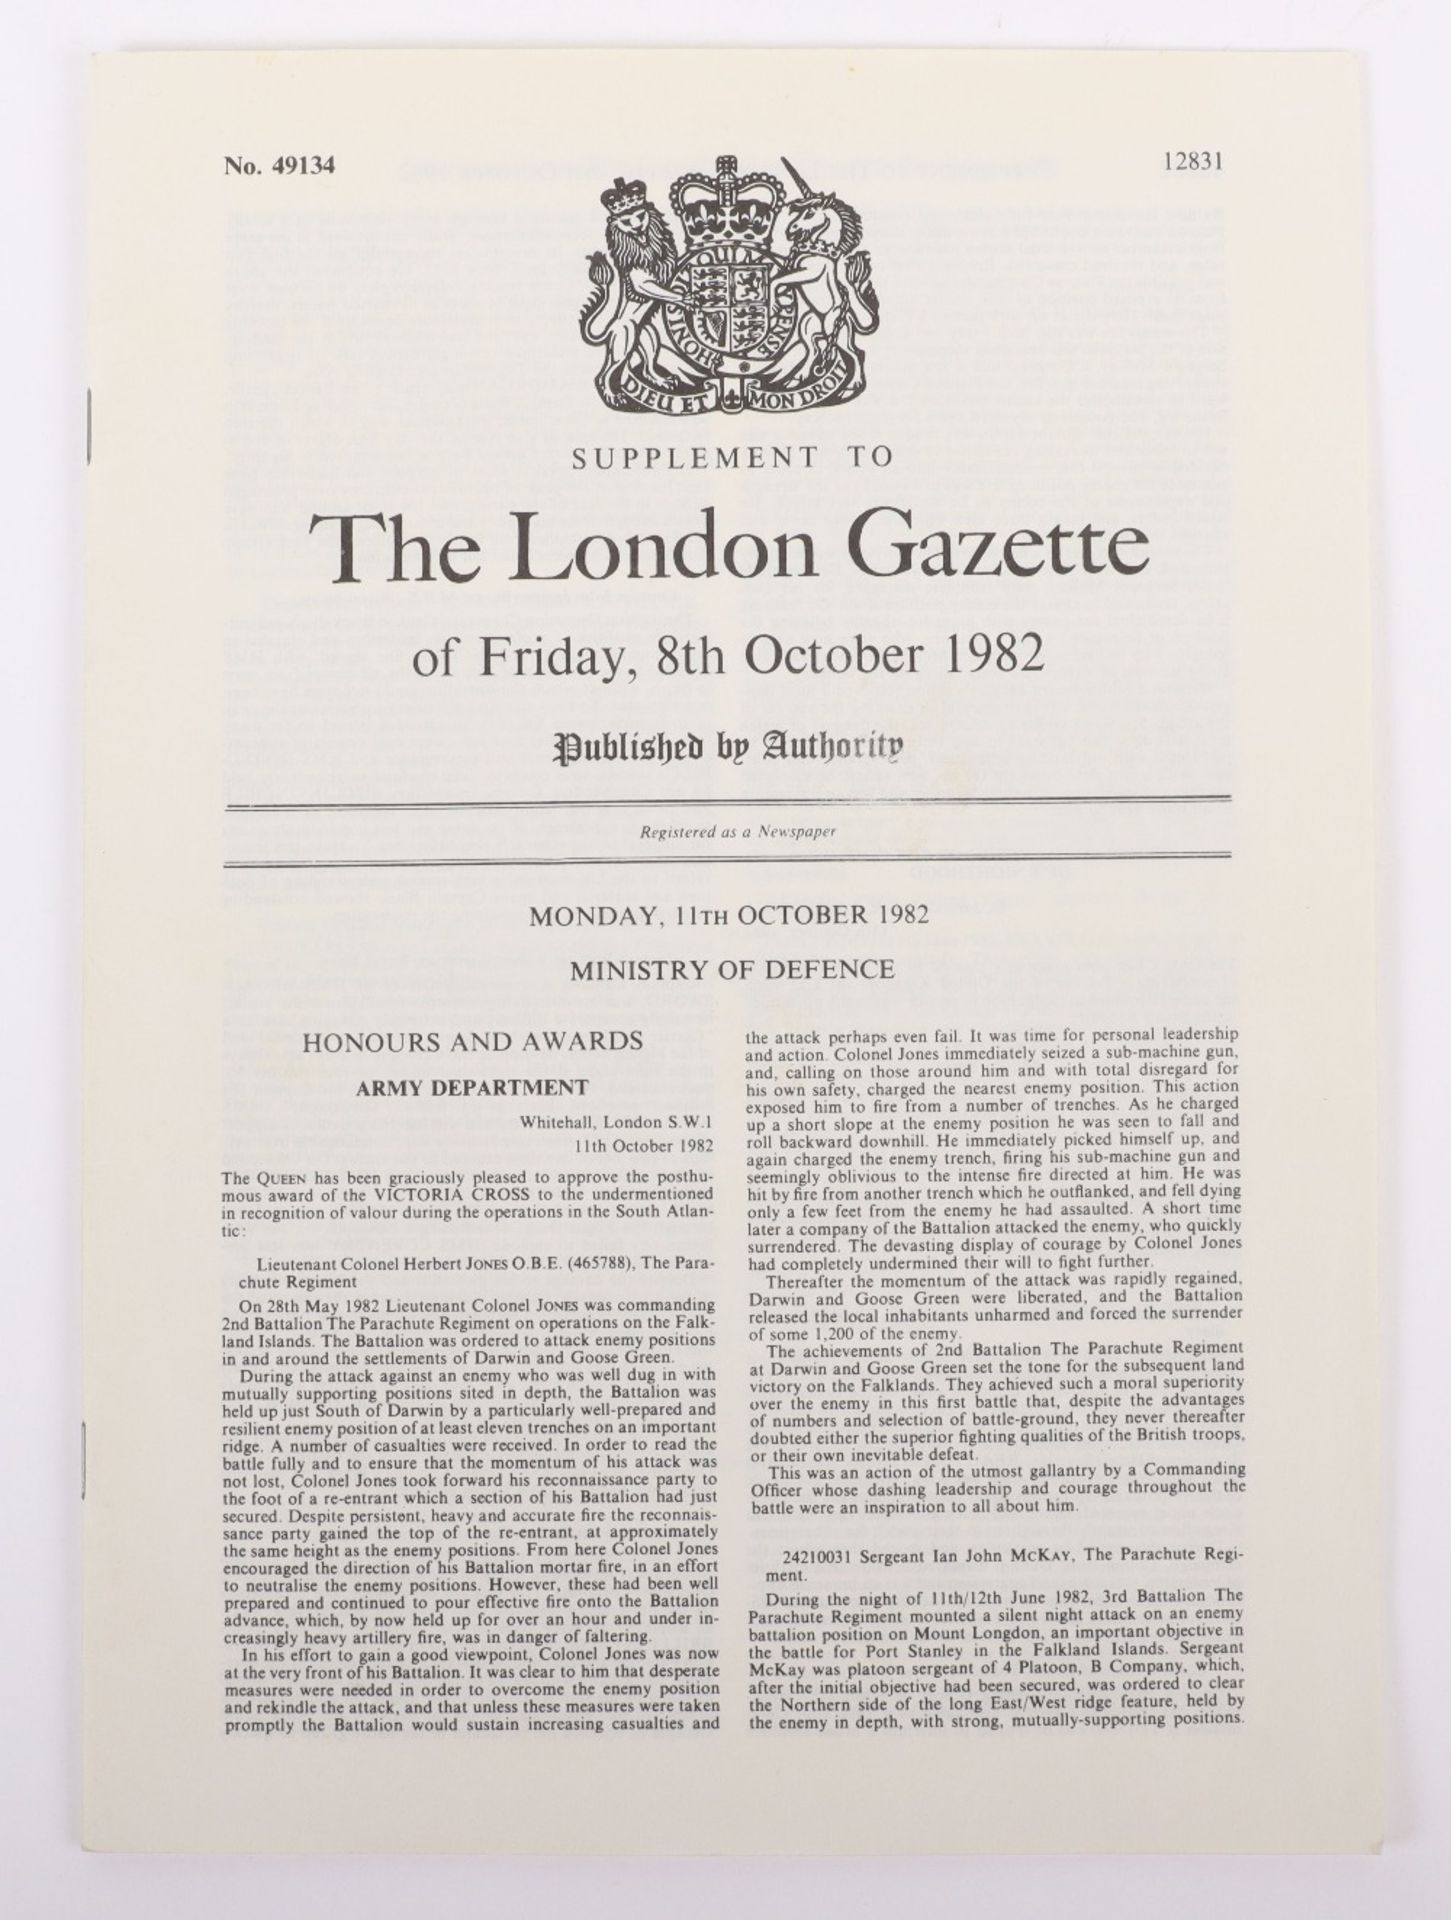 Original Supplement to London Gazette 8th October 1982 - Image 3 of 5